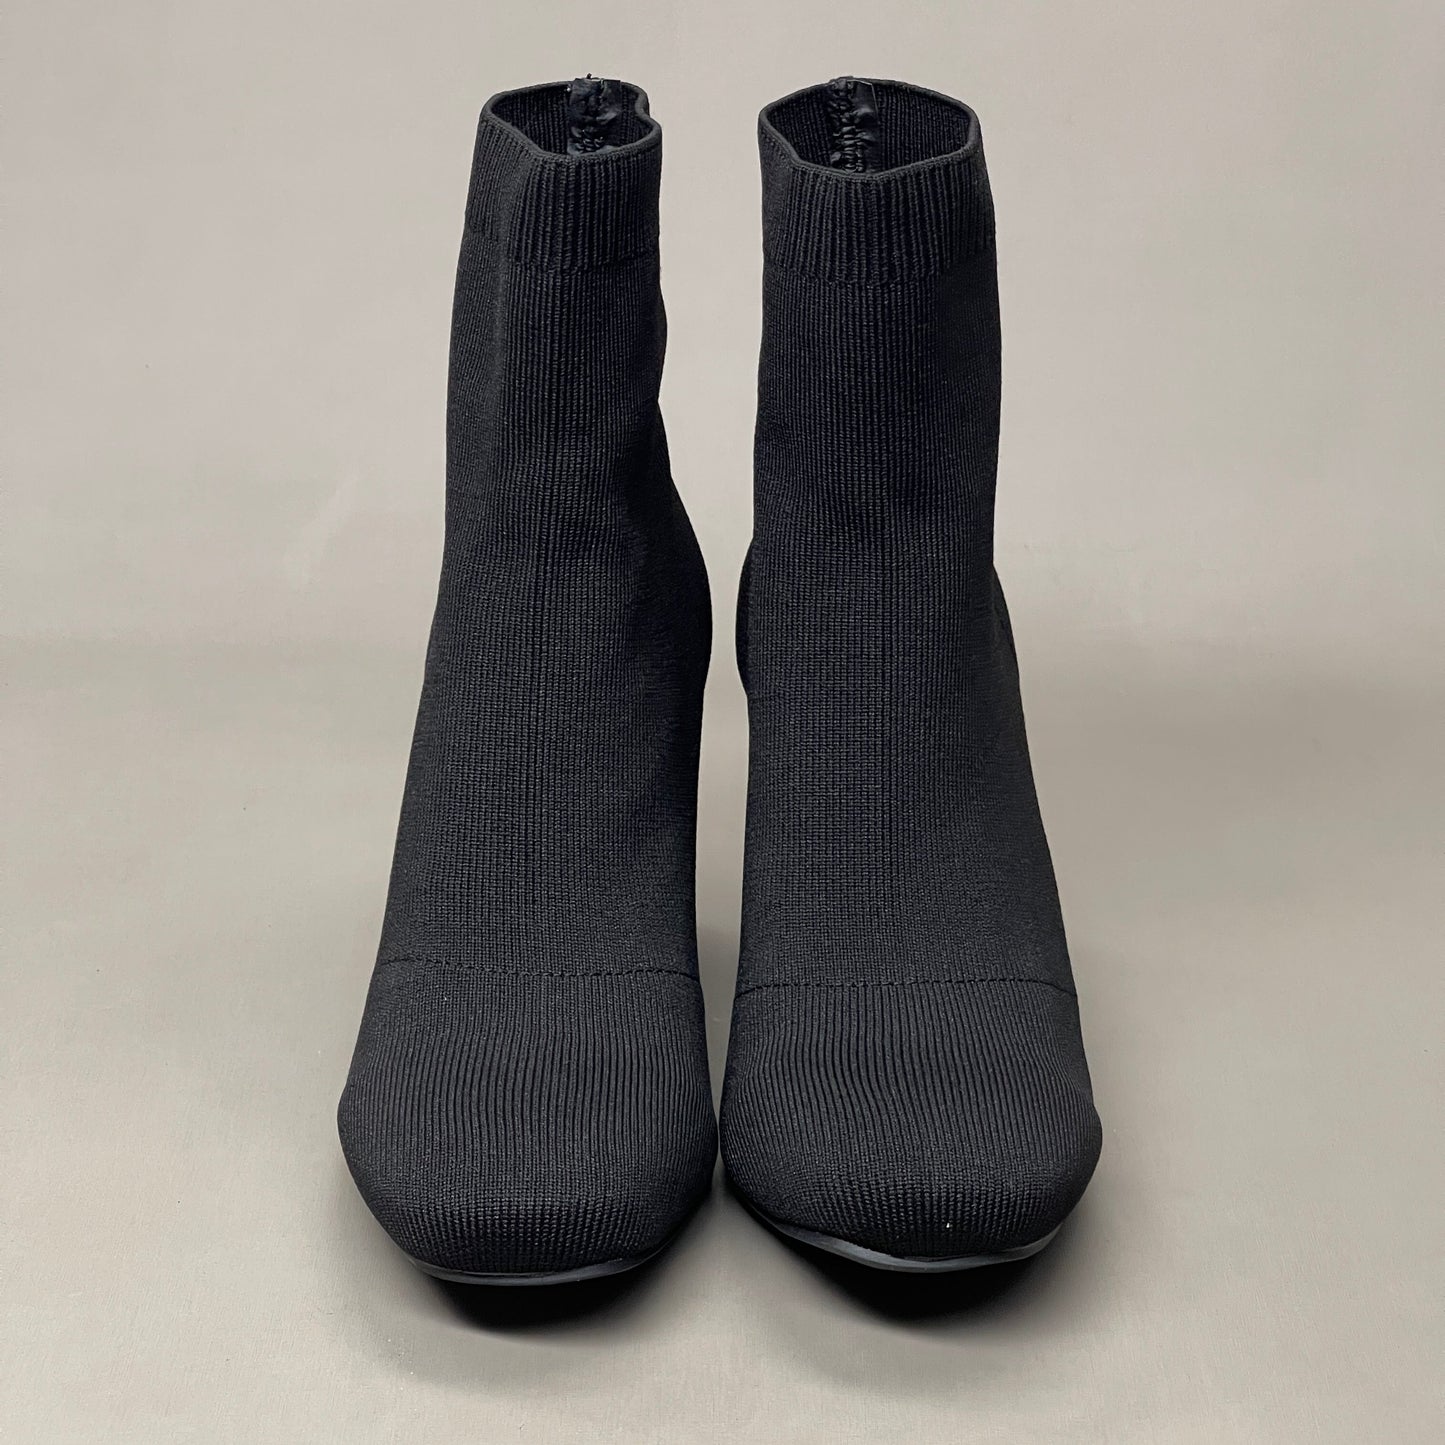 MIA Erika Fly Knit Booties Dress Boots Black 2” Heel Sz 4.5 GS7553115Y (New)